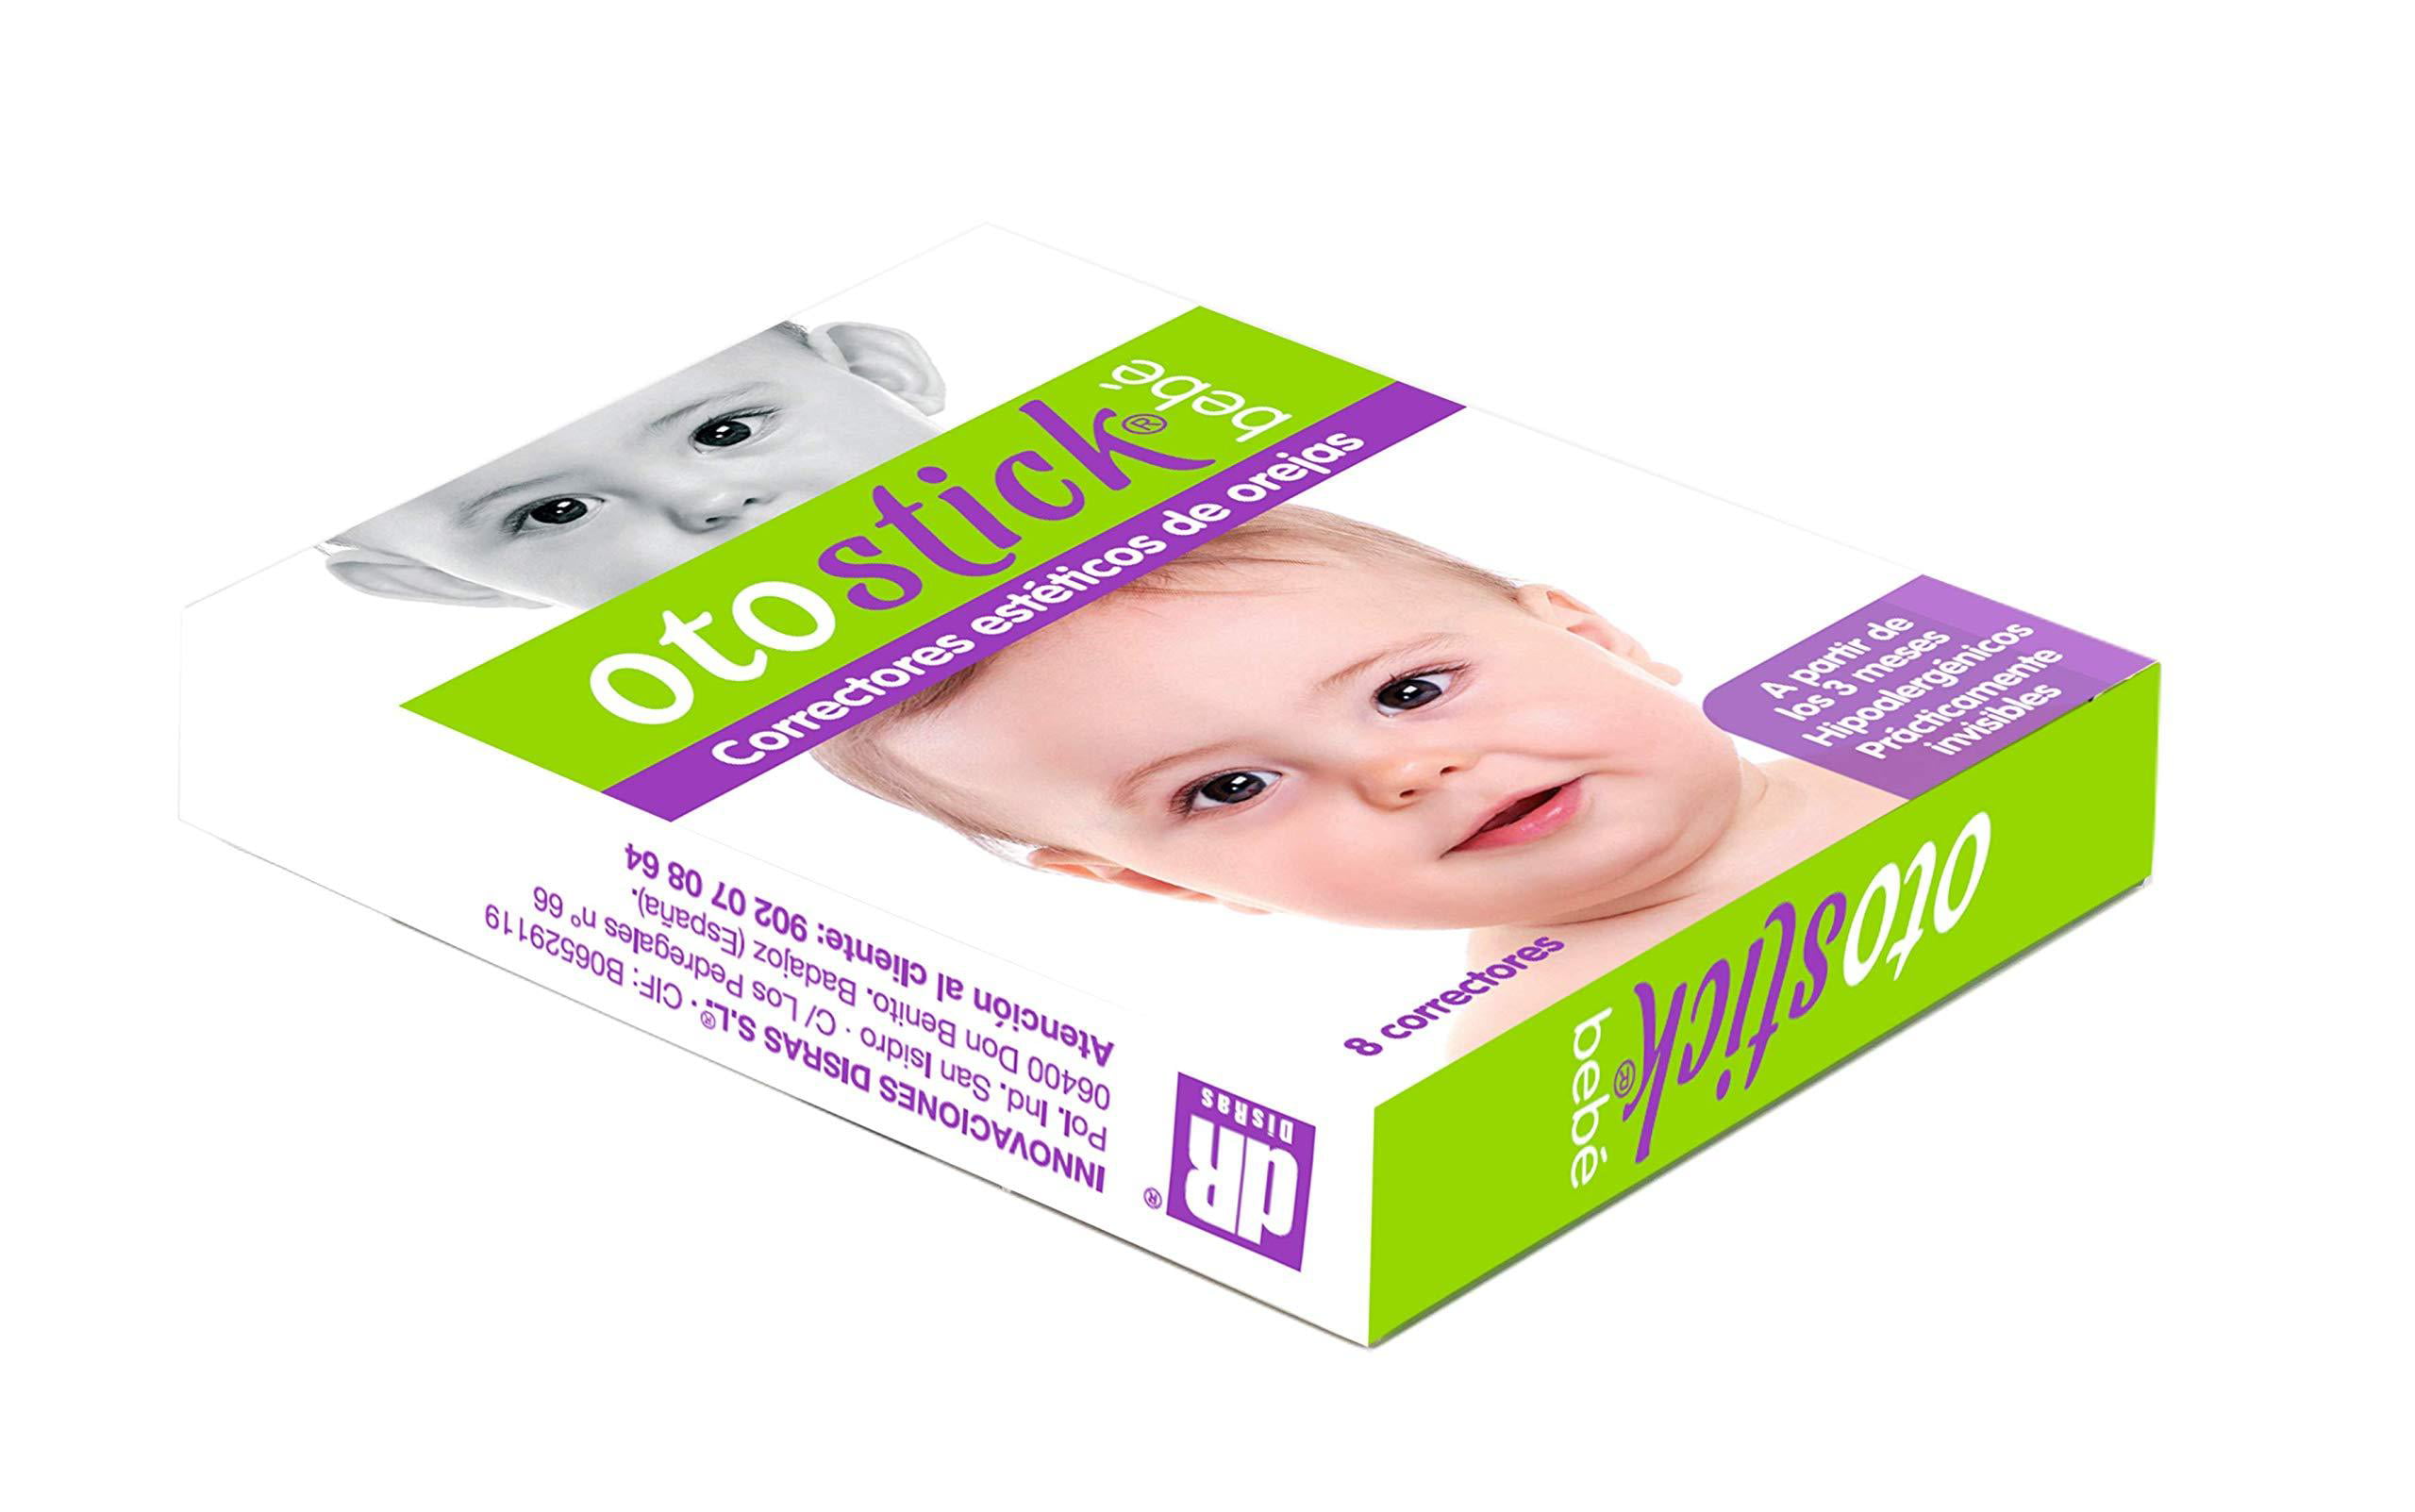 Infant Ear Corrector, Baby Ear Tape with Locator, Ear Aesthetic Corrector,  Ear Stickers for Protruding Ear, Breathable Deformed Ears Corrector